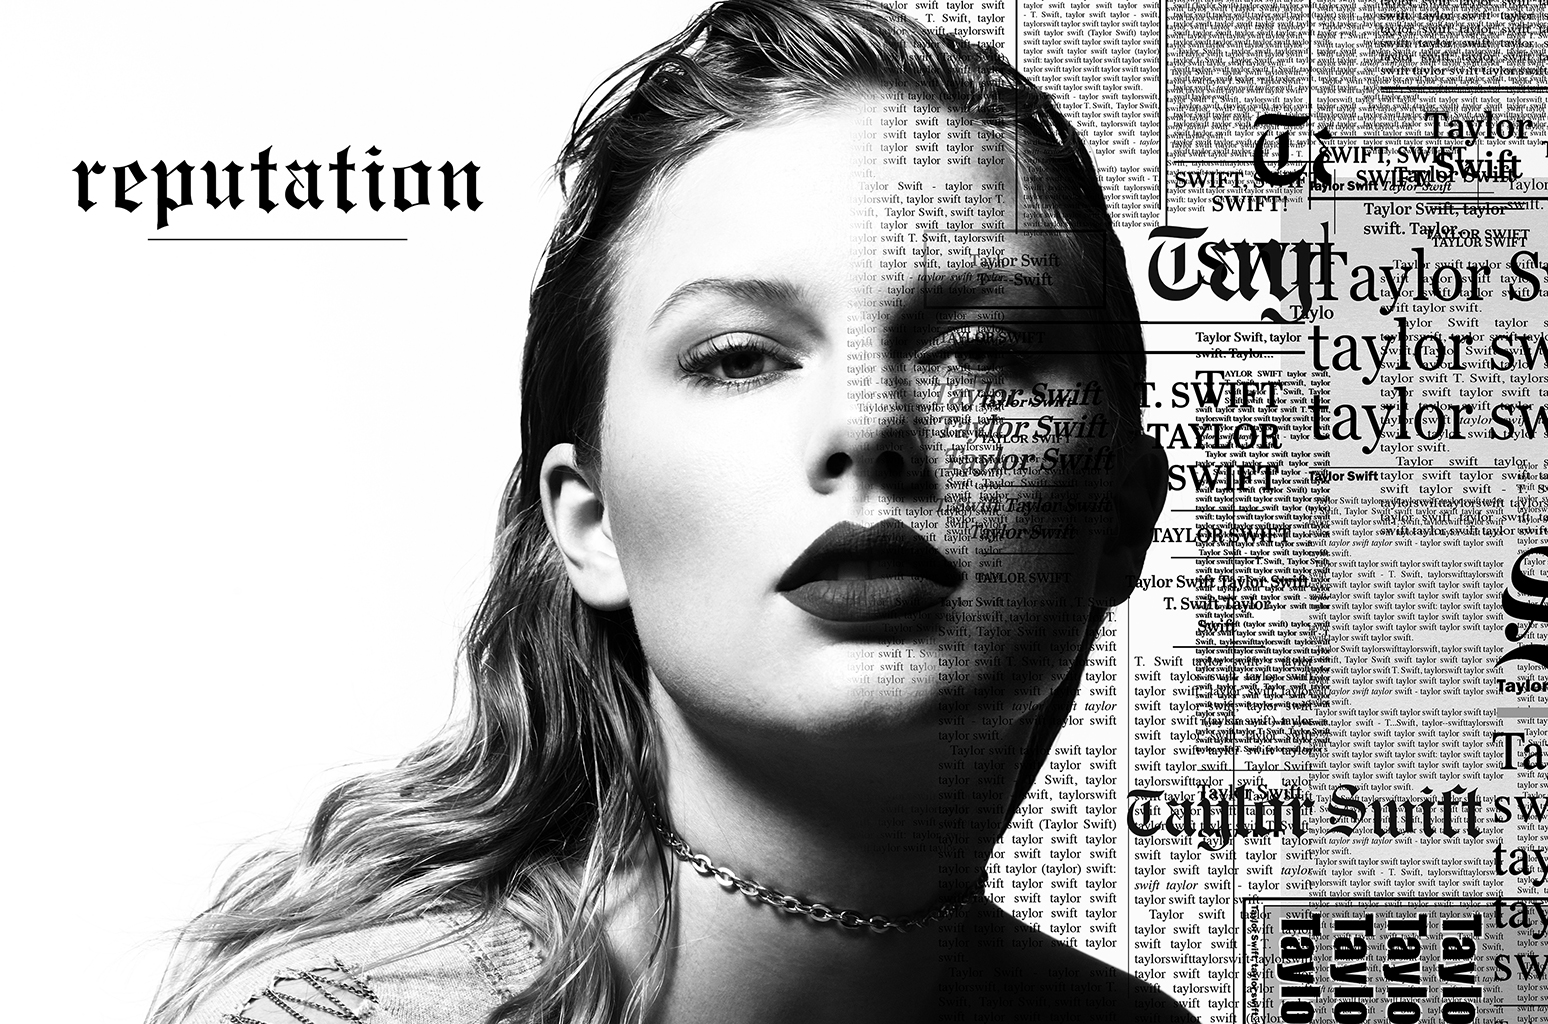 Taylor-Swift-reputation